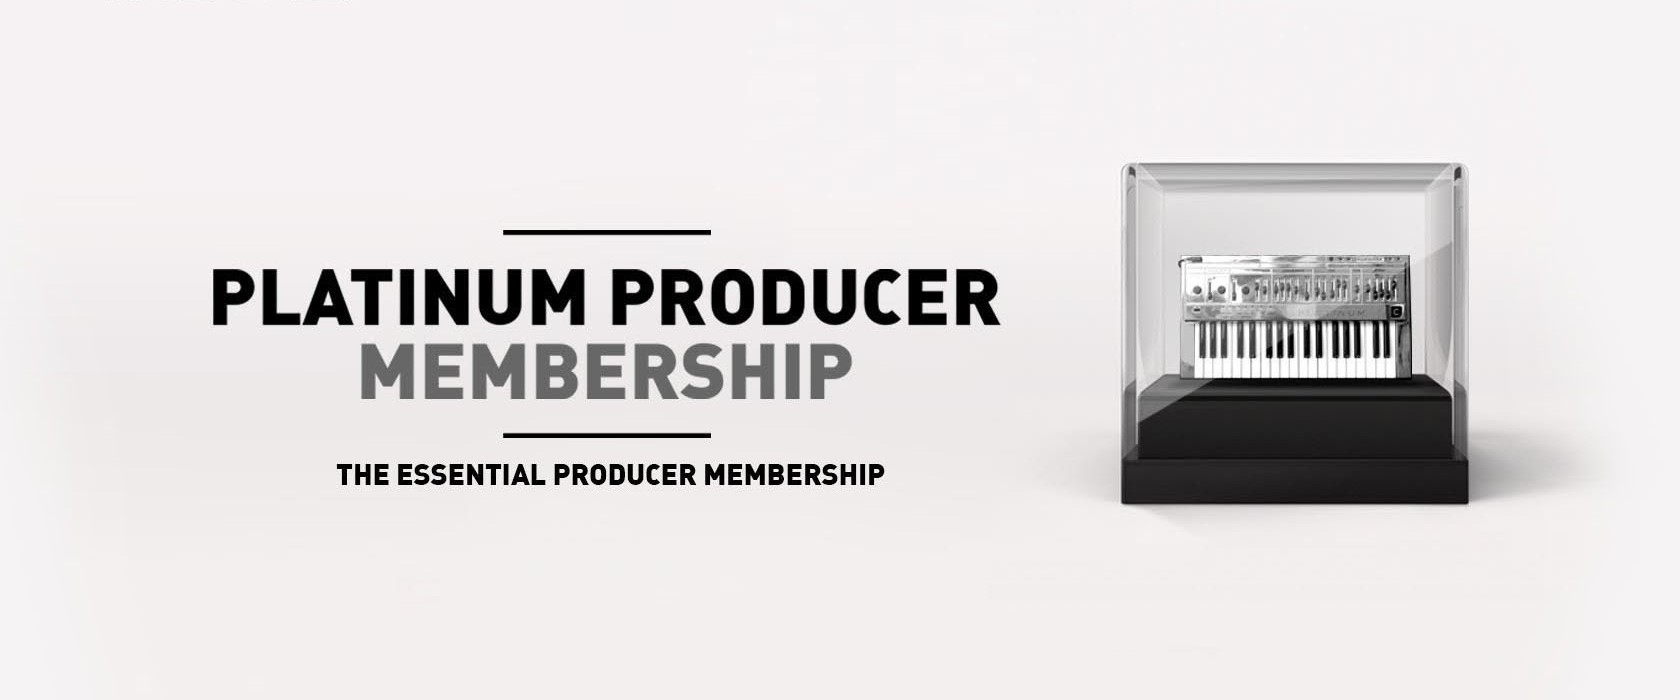 Sample Tools by CR2 Platinum Producer Membership